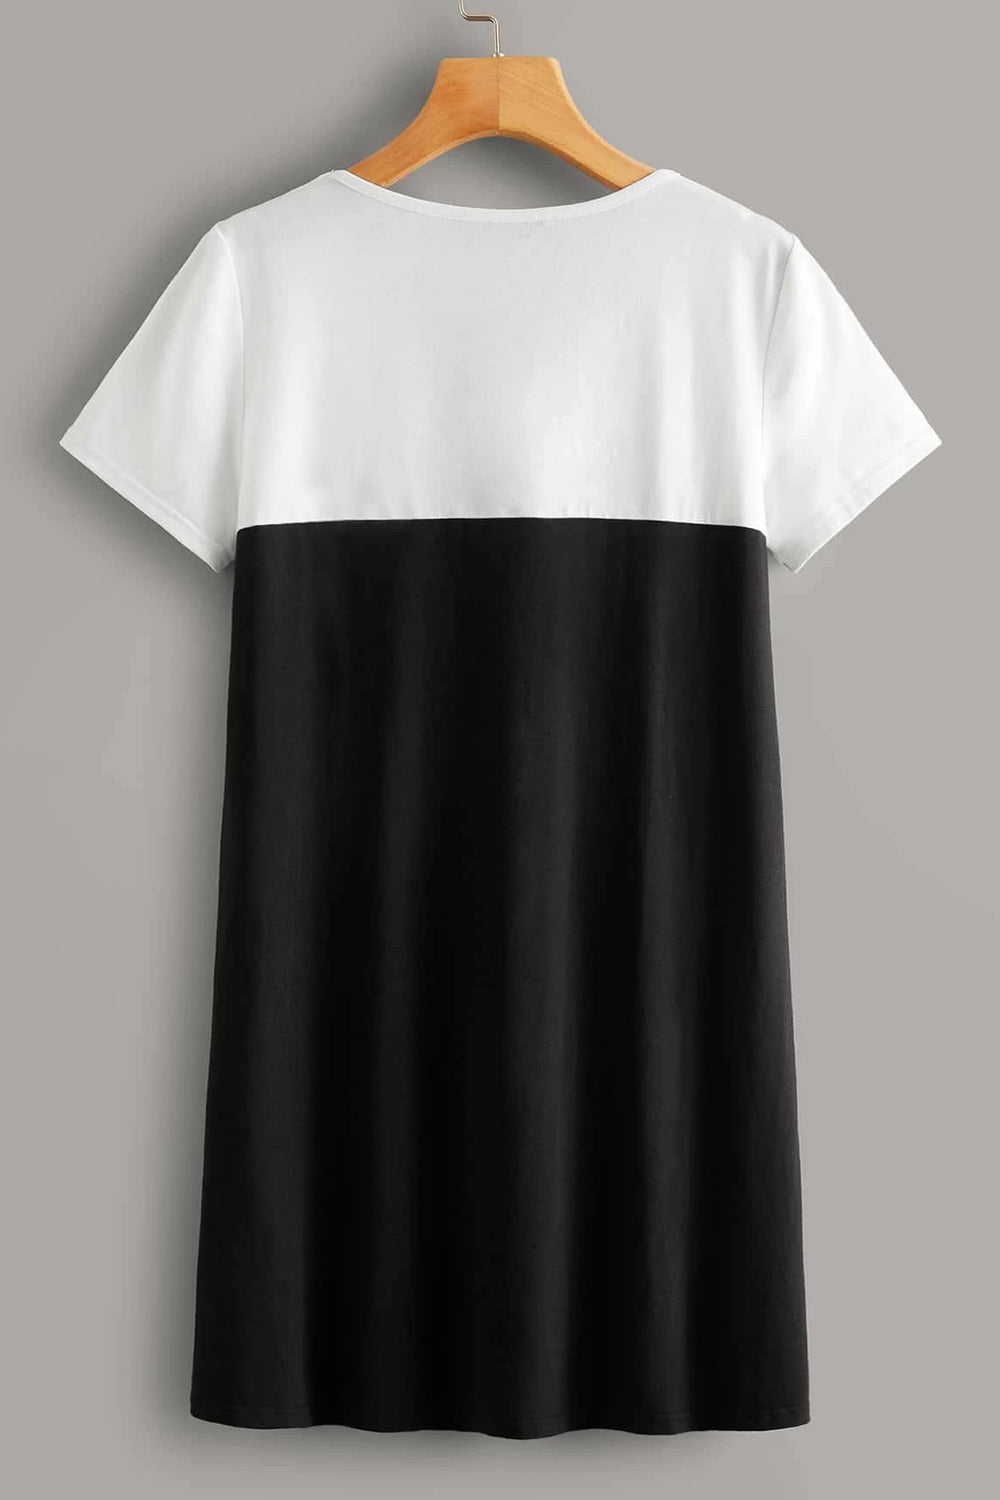 Black n White Dress